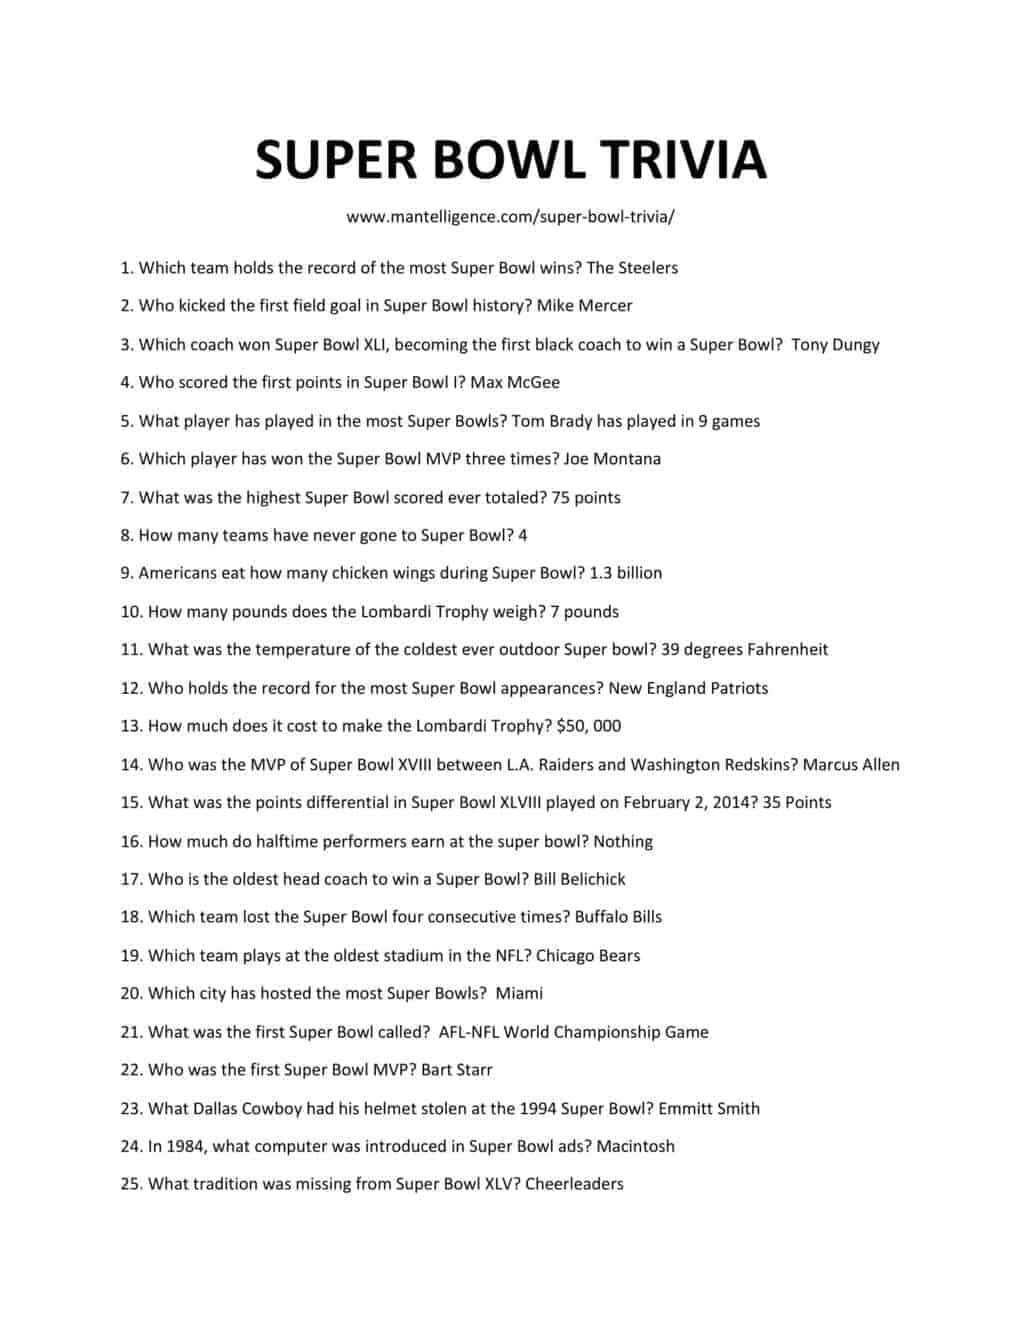 superbowl party quiz